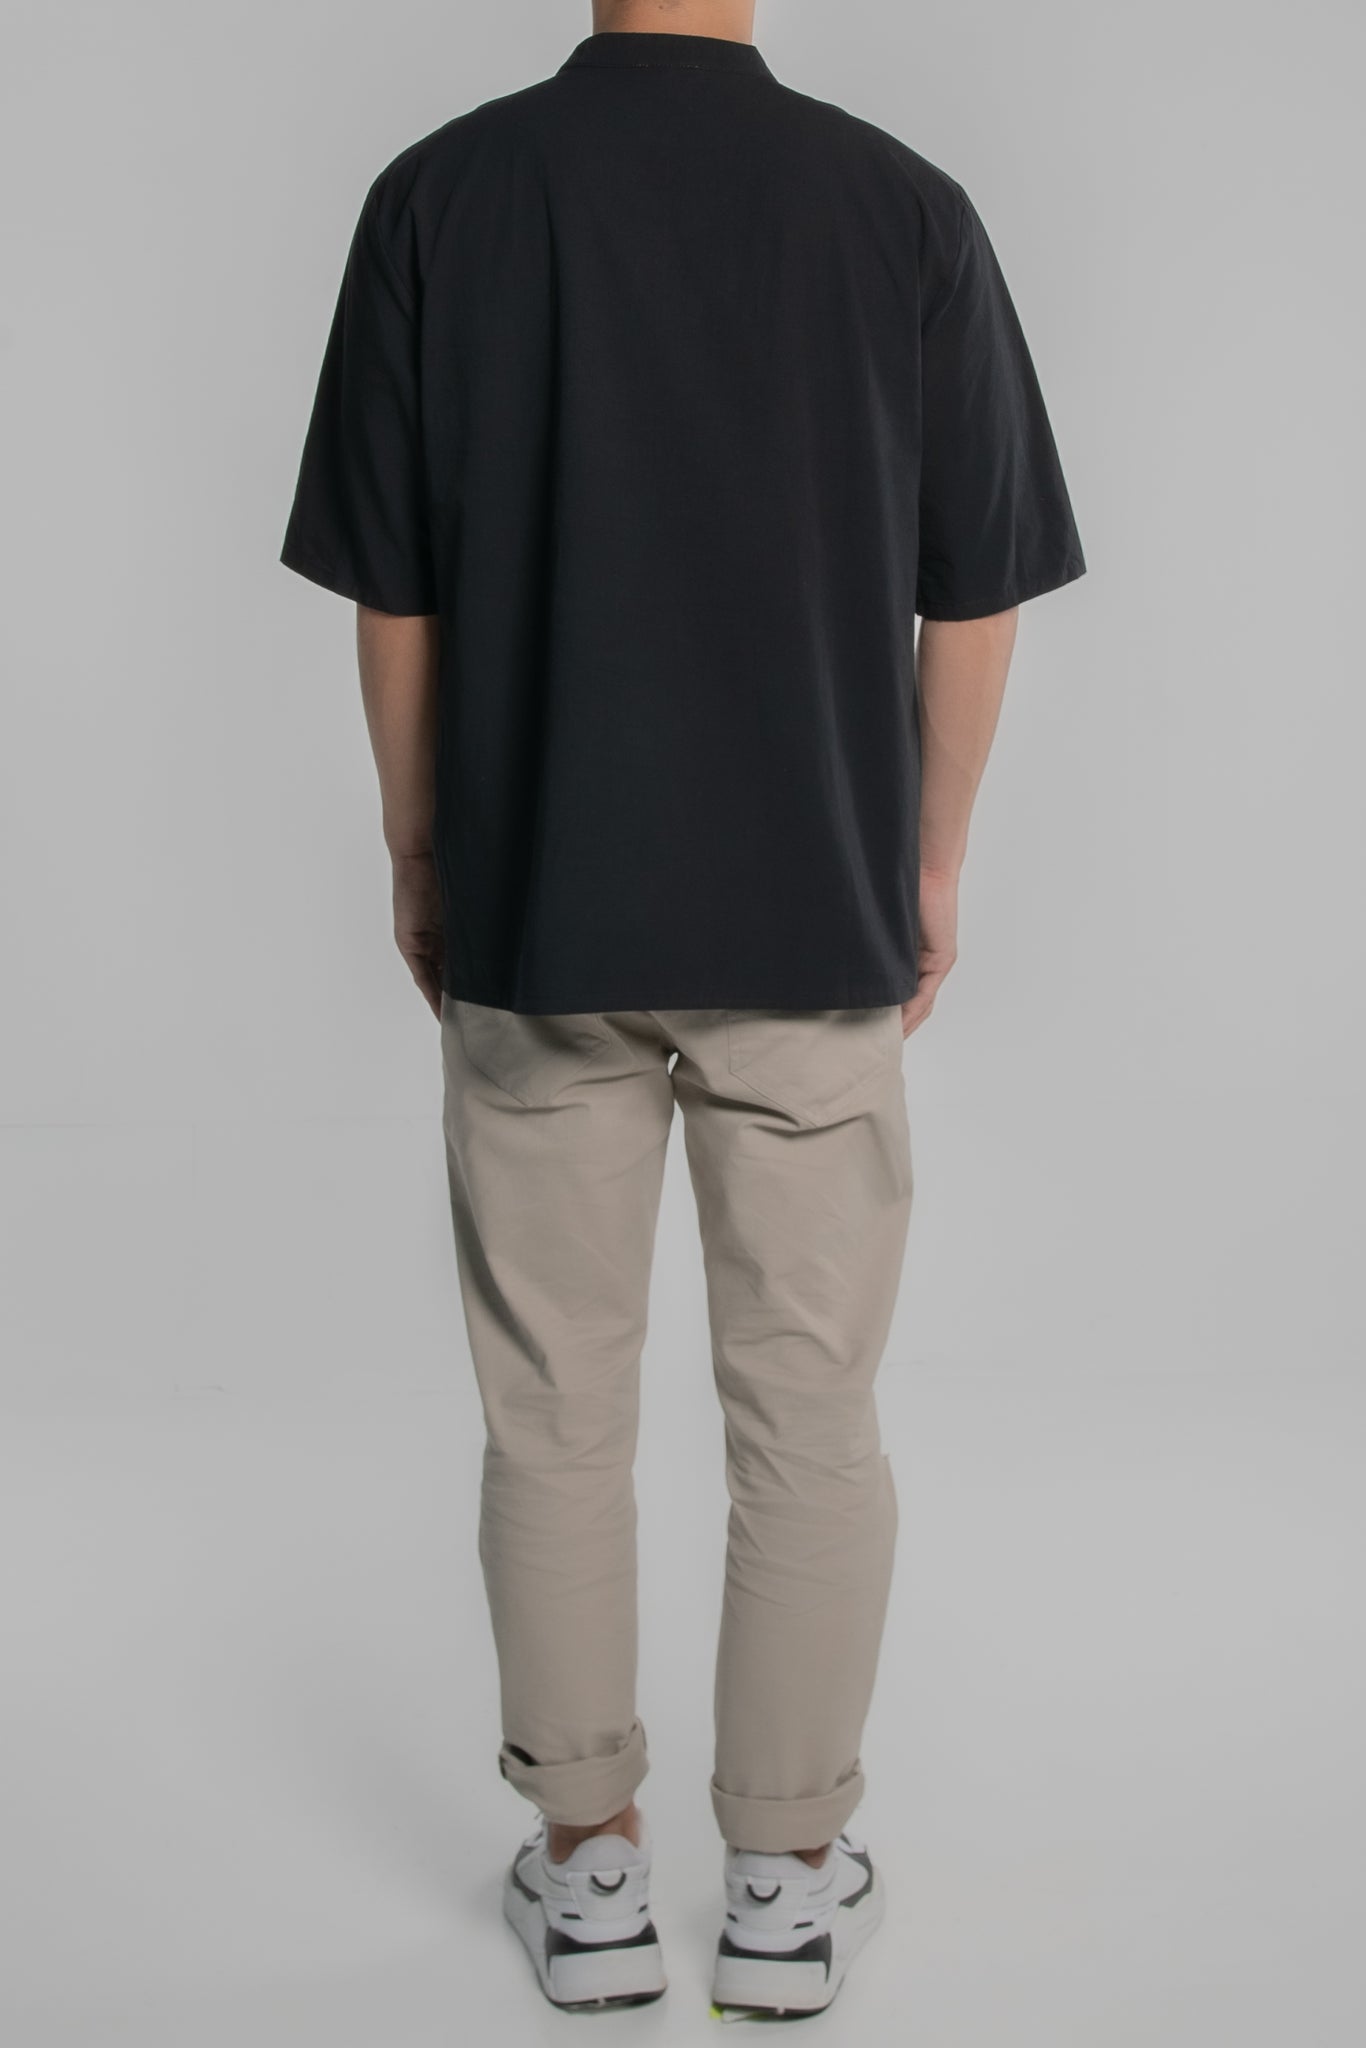 Mandarin Collar Short Sleeve Shirt (Black)